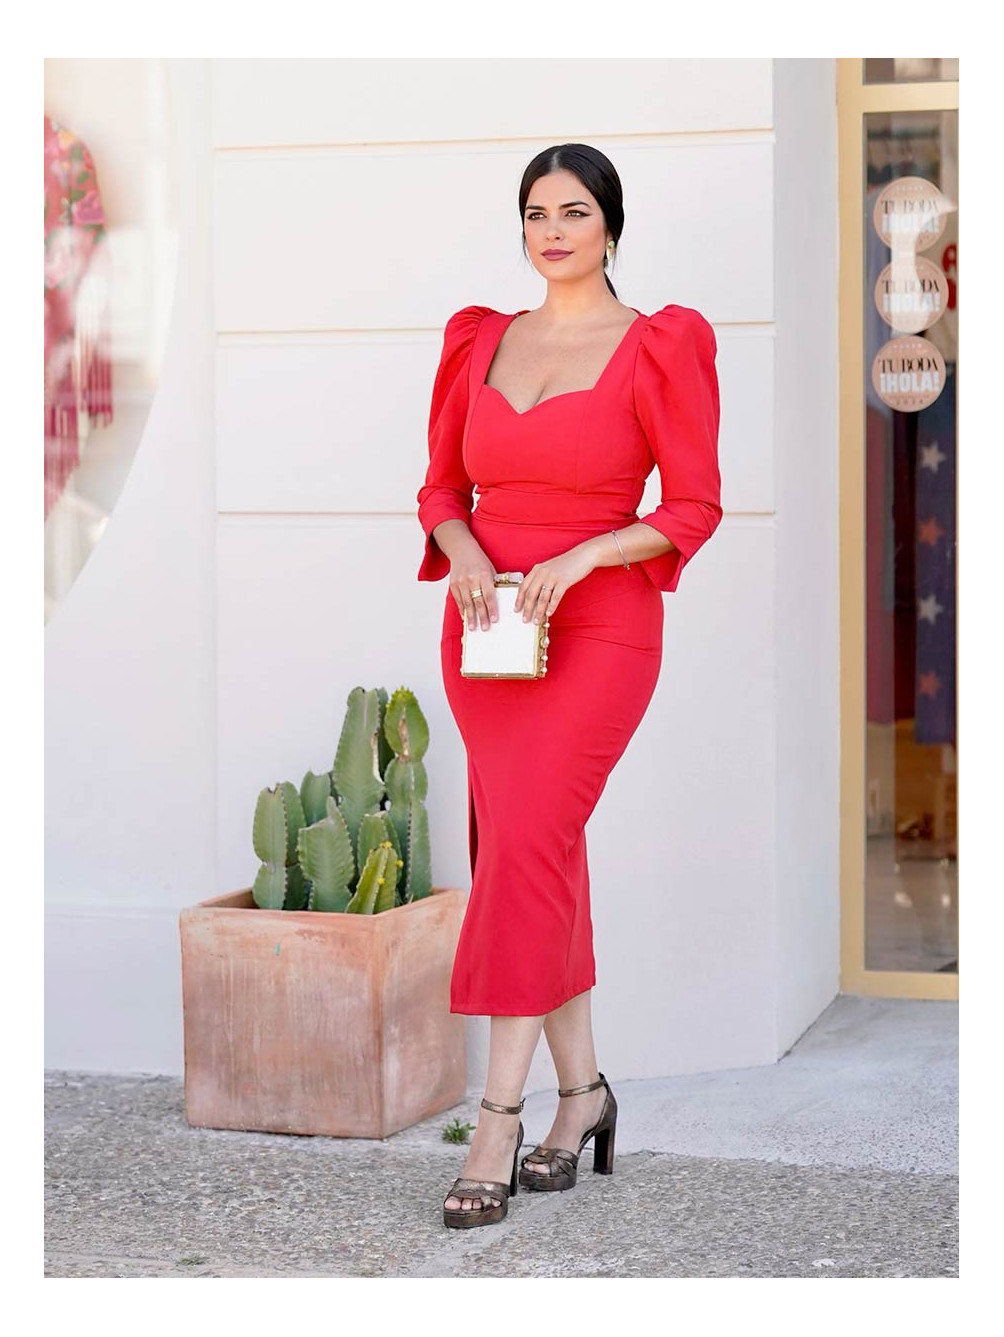 Vestido Caleta Rojo, Ropa Invitada, Moda Andaluza Fiesta, Mariquita Trasquilá